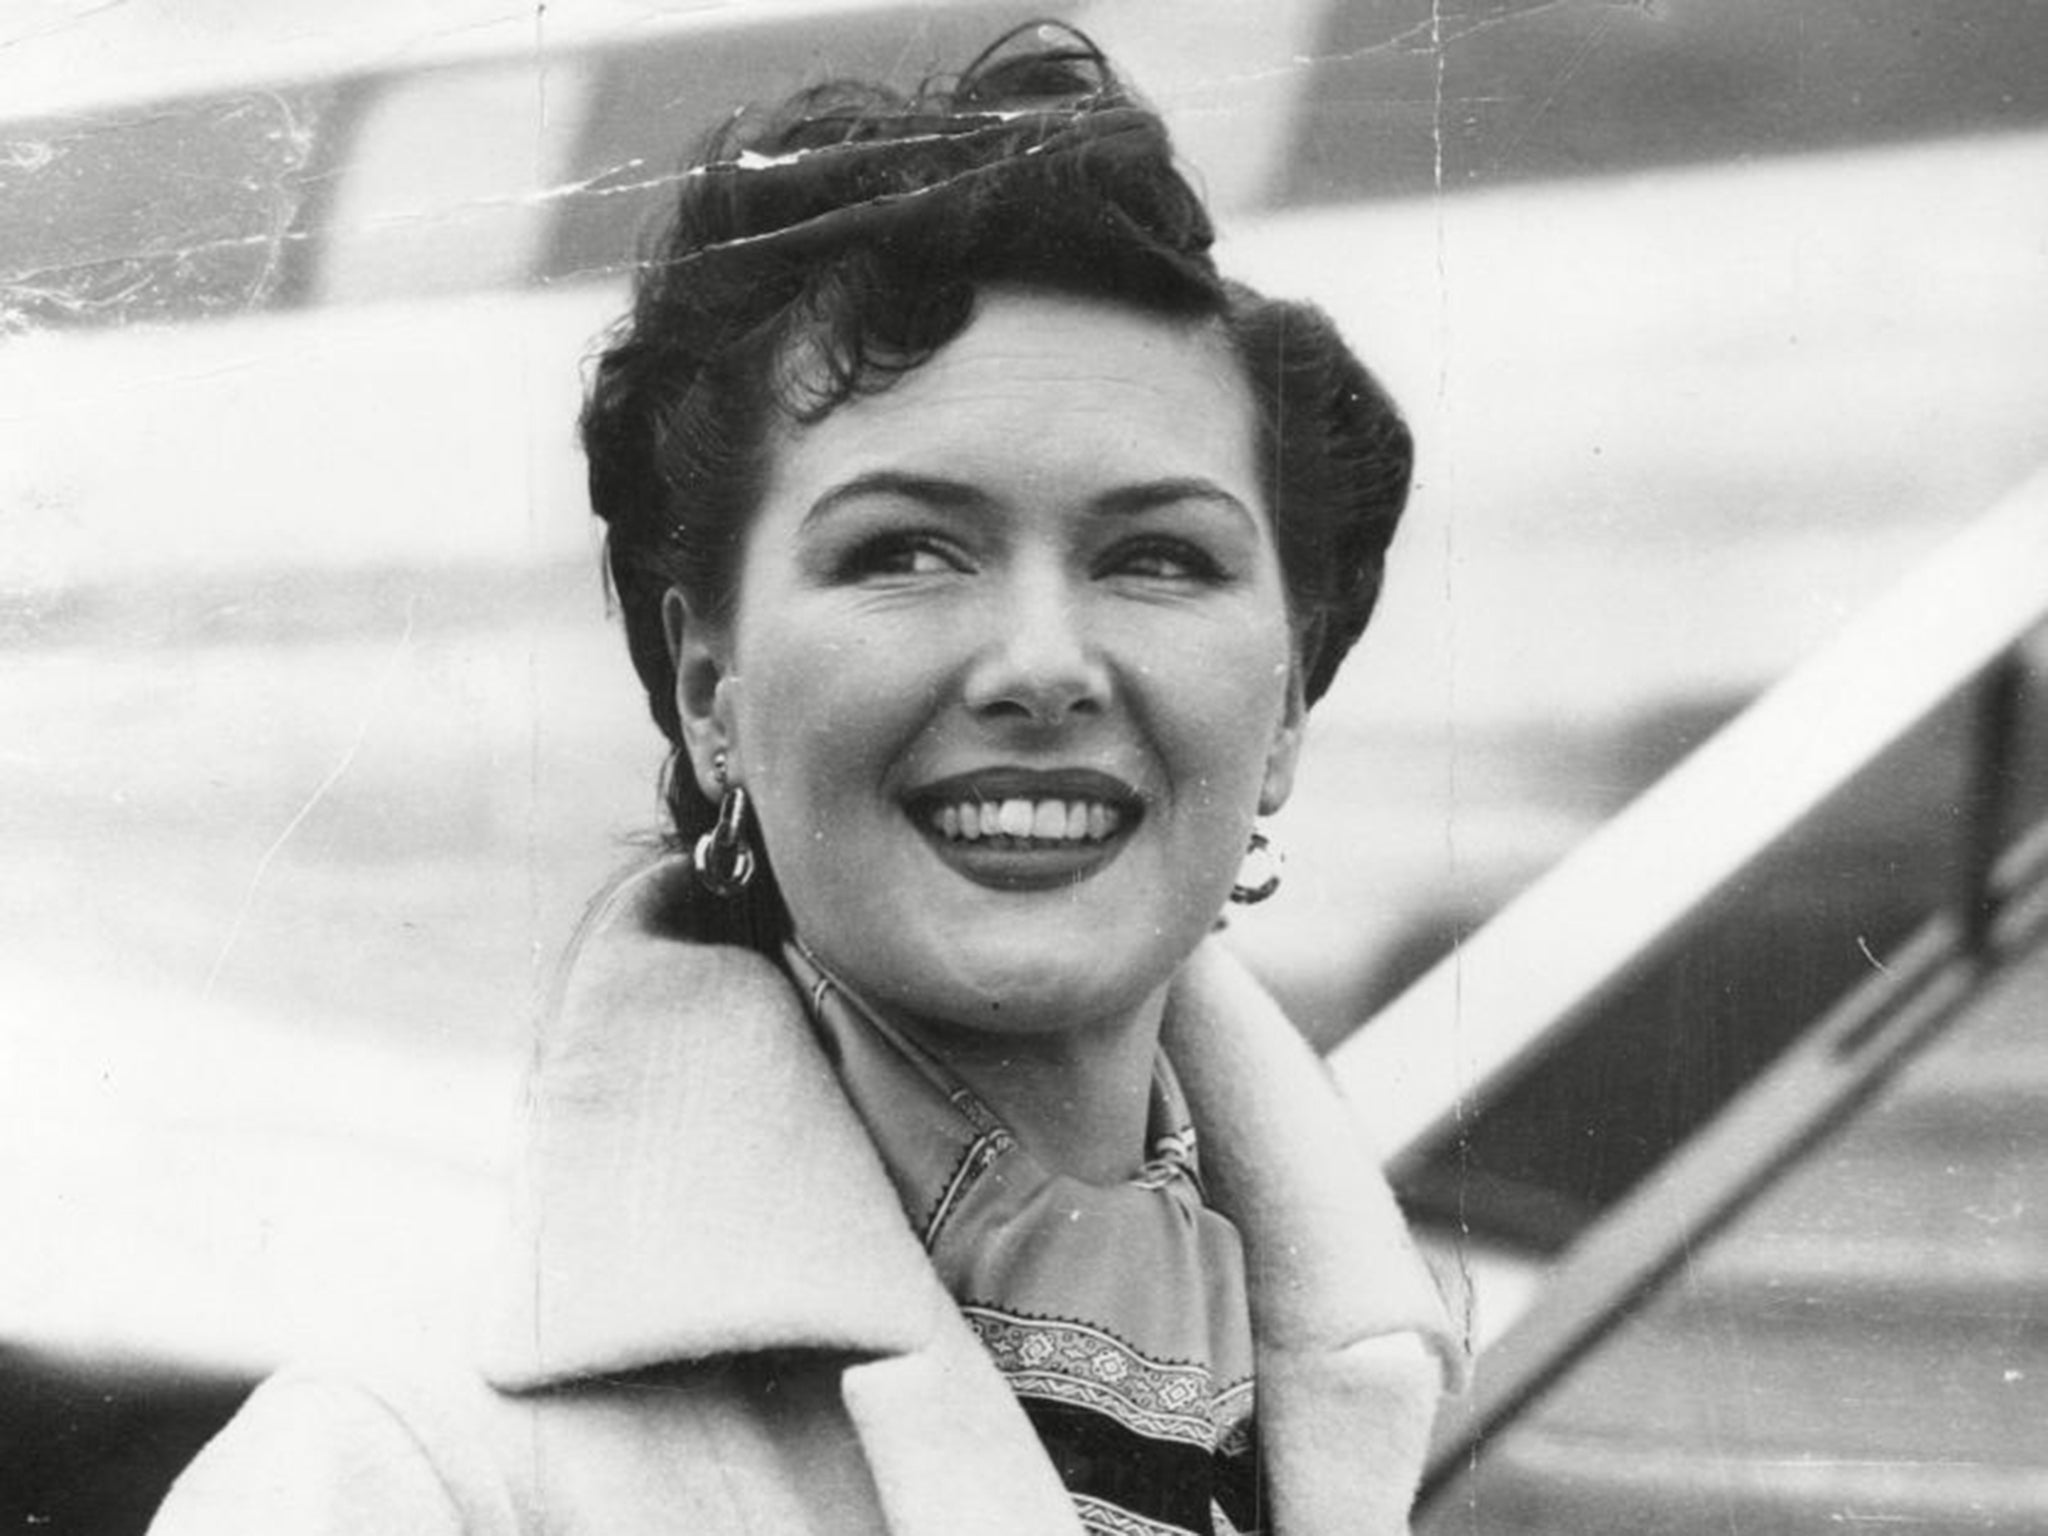 Wardington, then plain Audrey White, in 1953; her face was ubiquitous in the 1950s